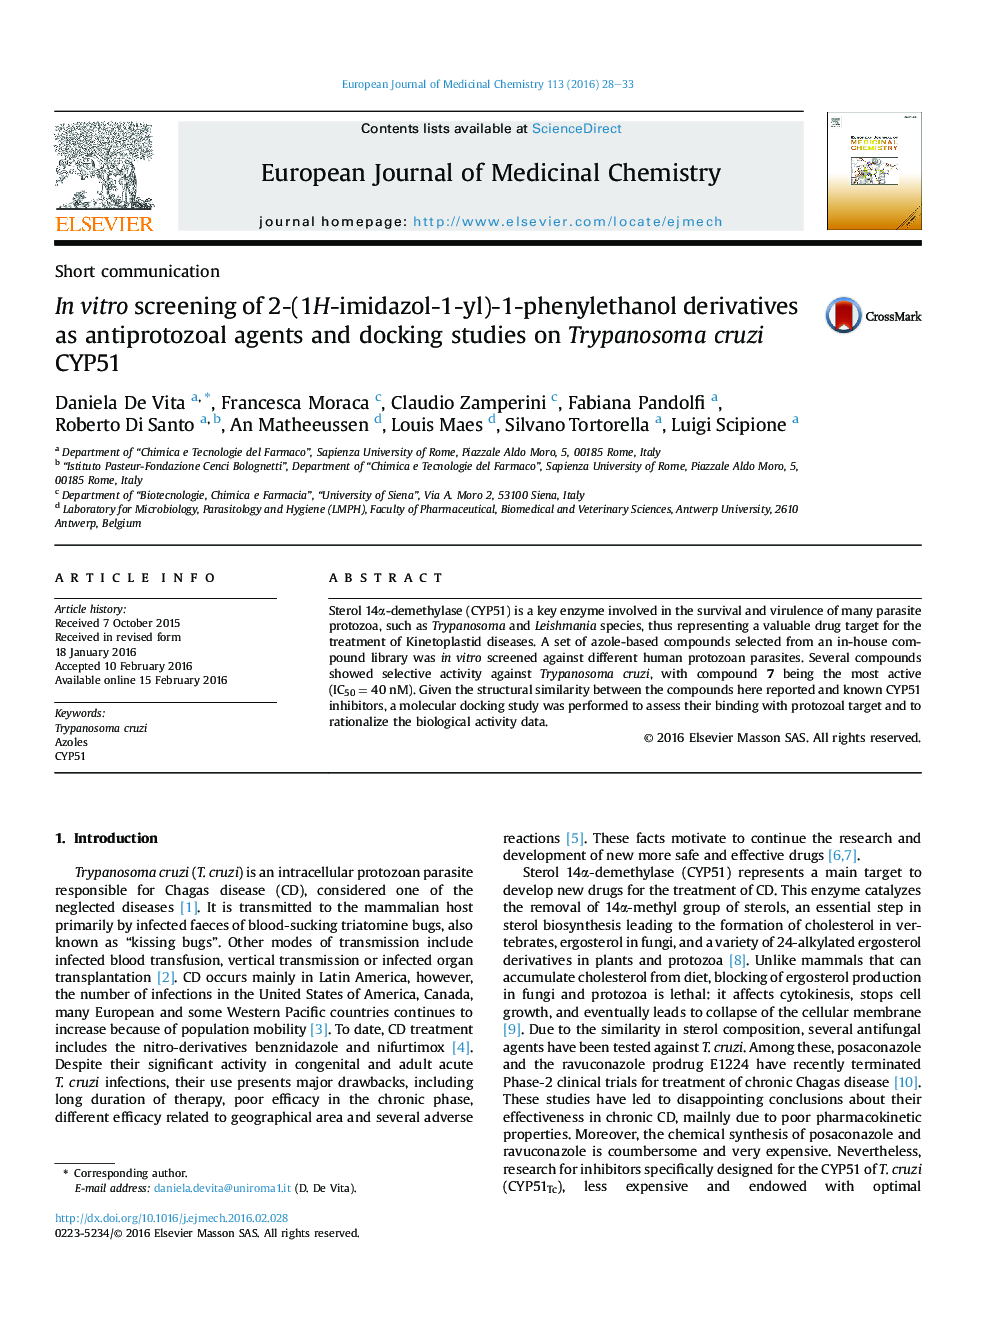 In vitro screening of 2-(1H-imidazol-1-yl)-1-phenylethanol derivatives as antiprotozoal agents and docking studies on Trypanosoma cruzi CYP51